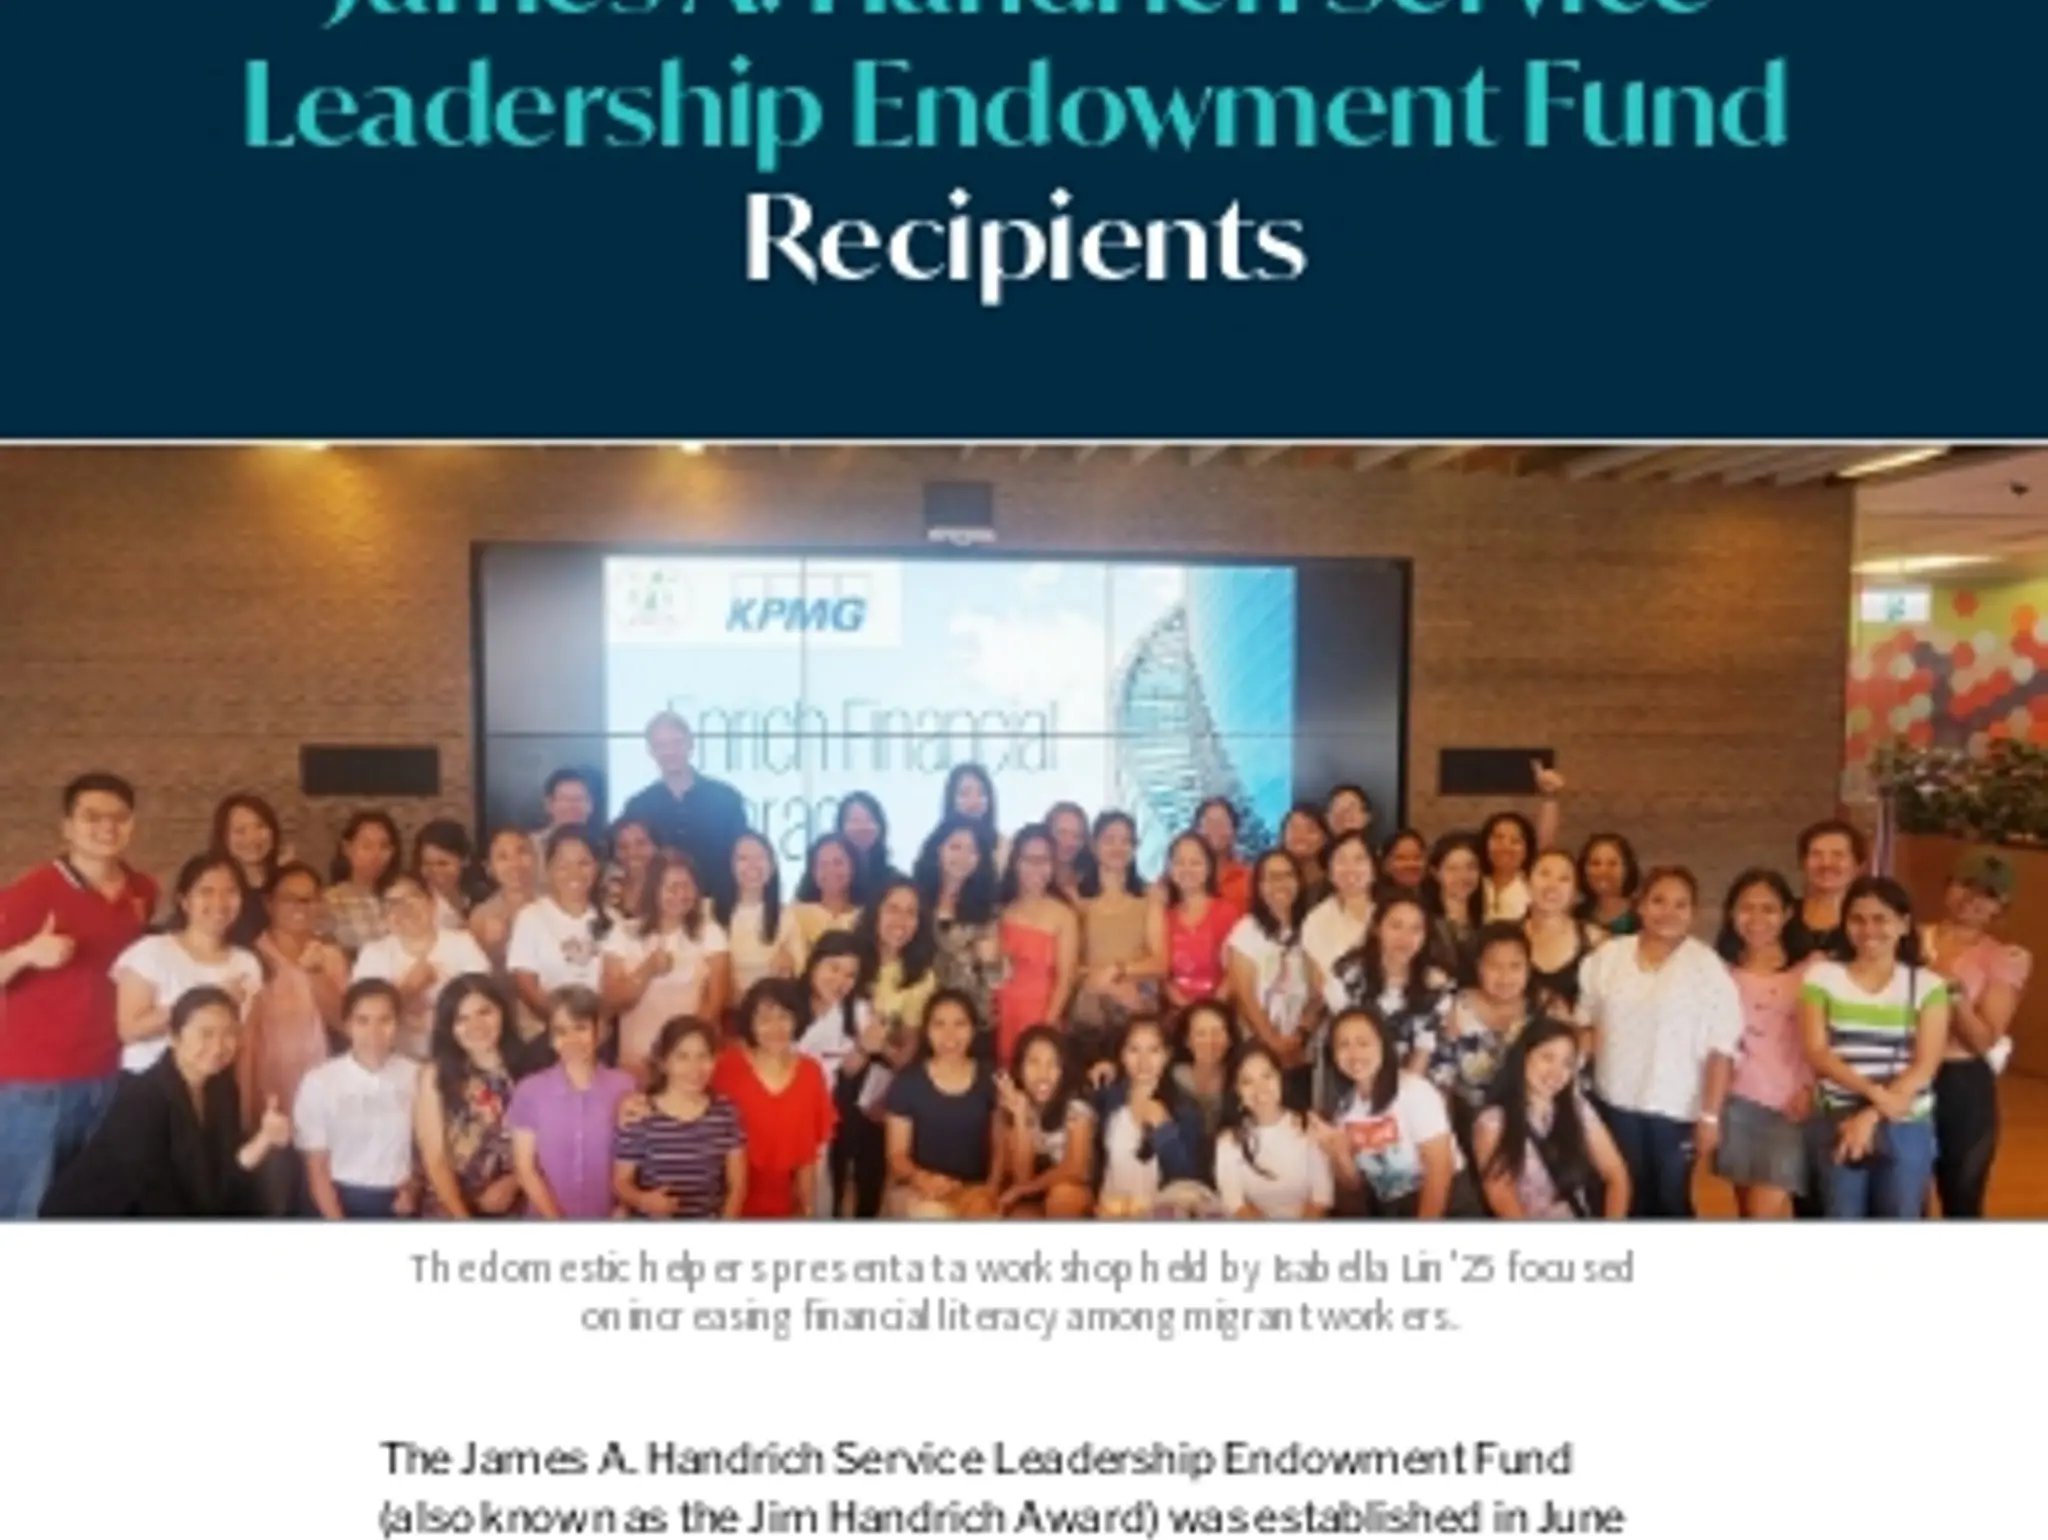 James A. Handrich Service Leadership Endowment Fund Recipients